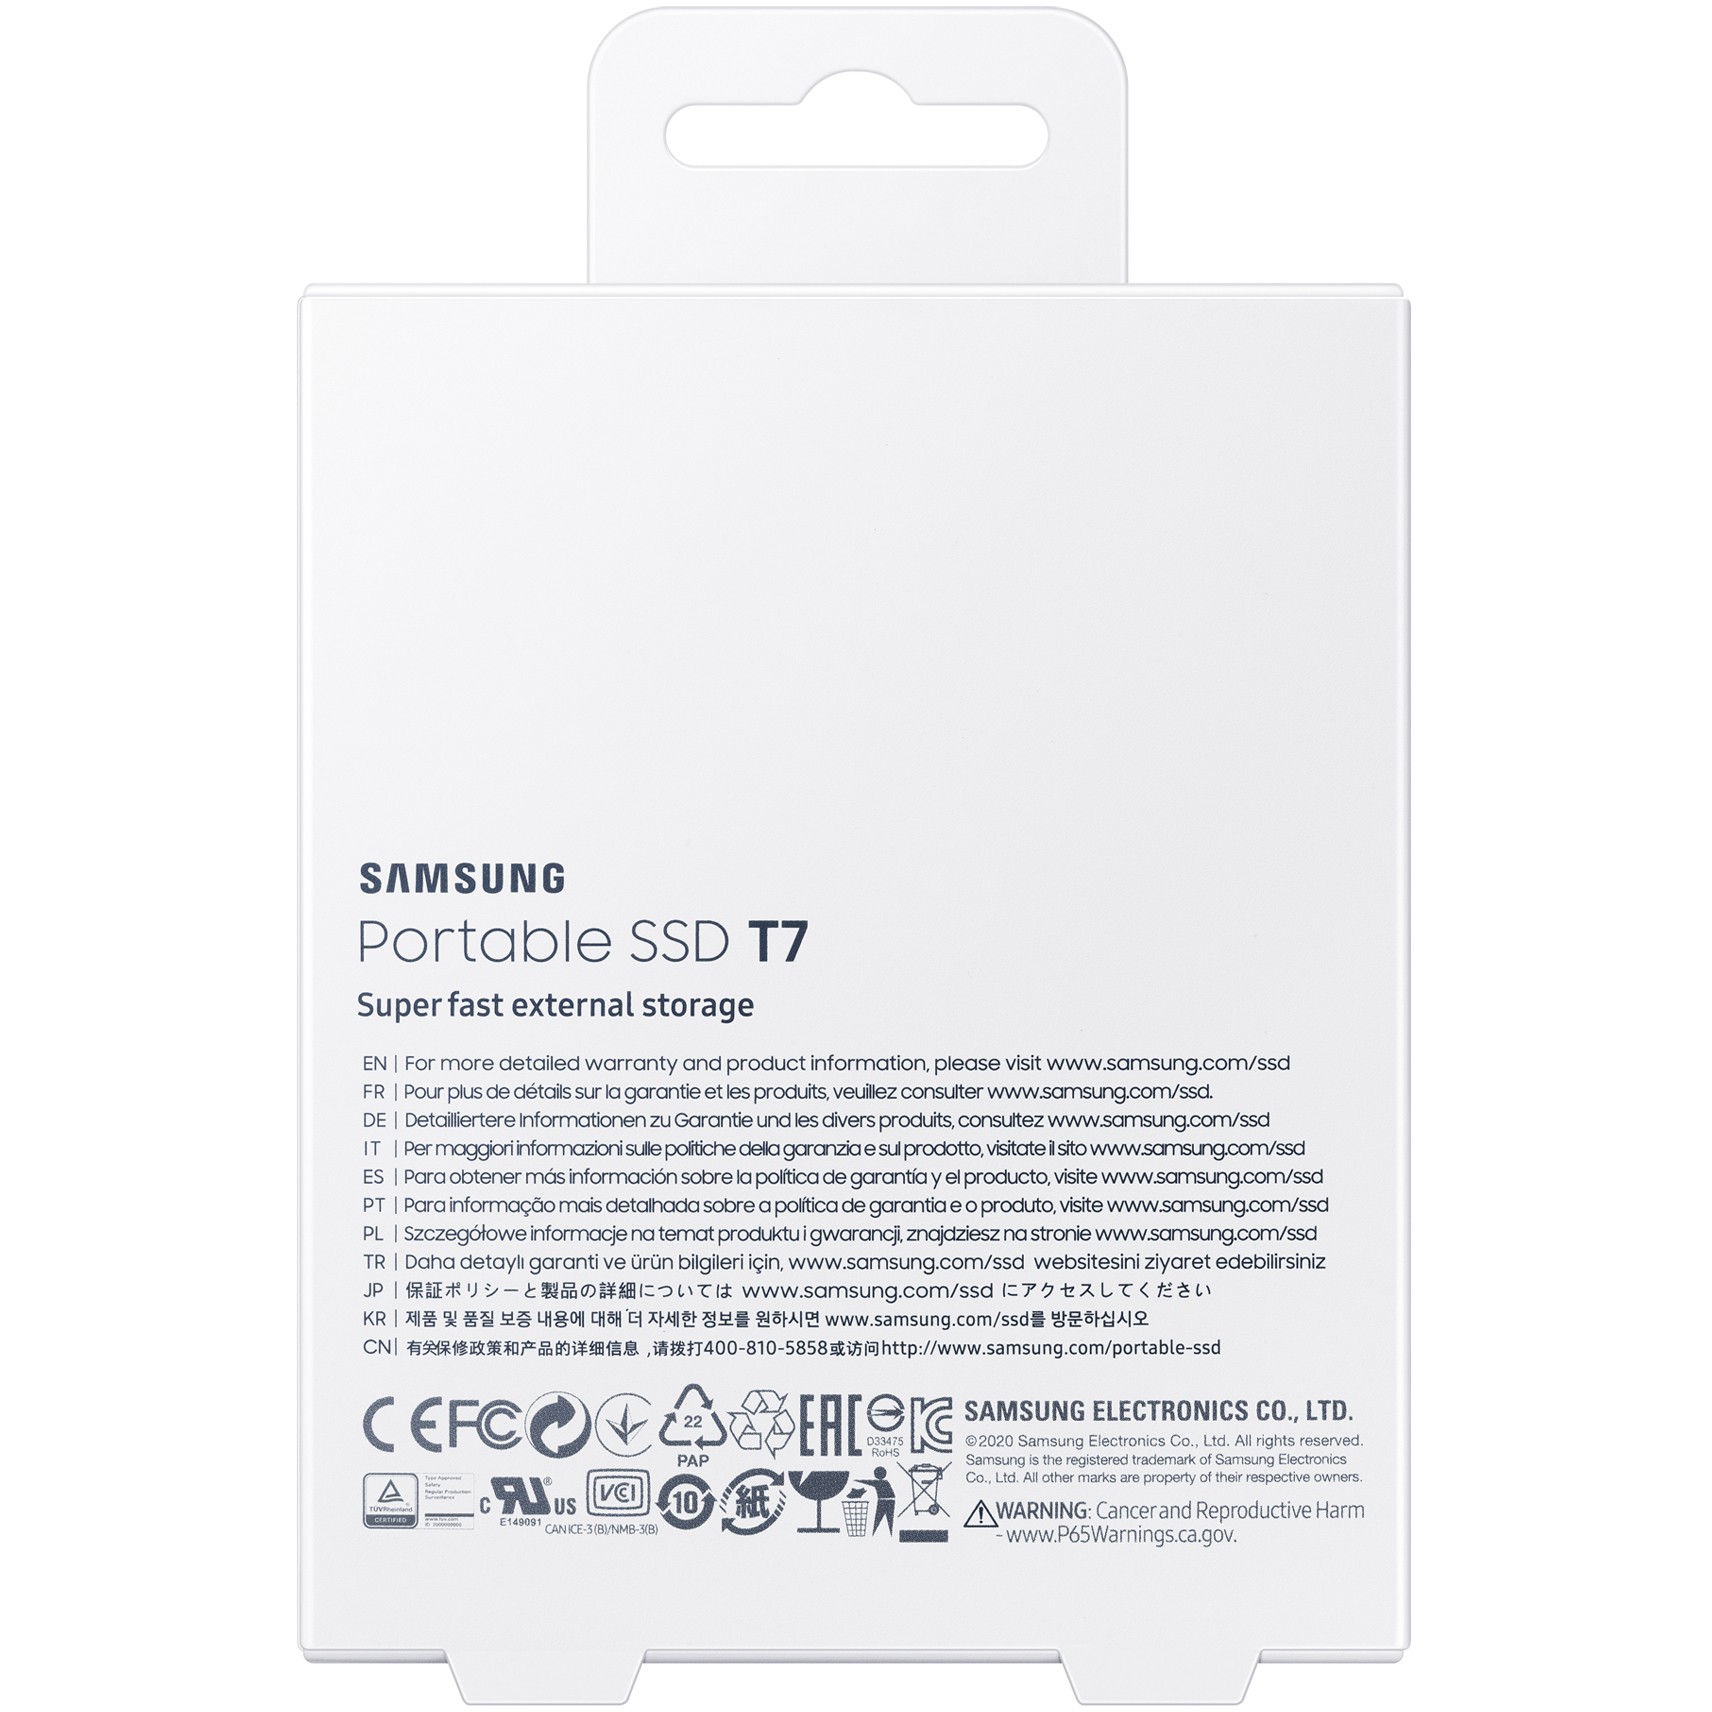 Samsung Portable SSD T7 1000 GB Rot